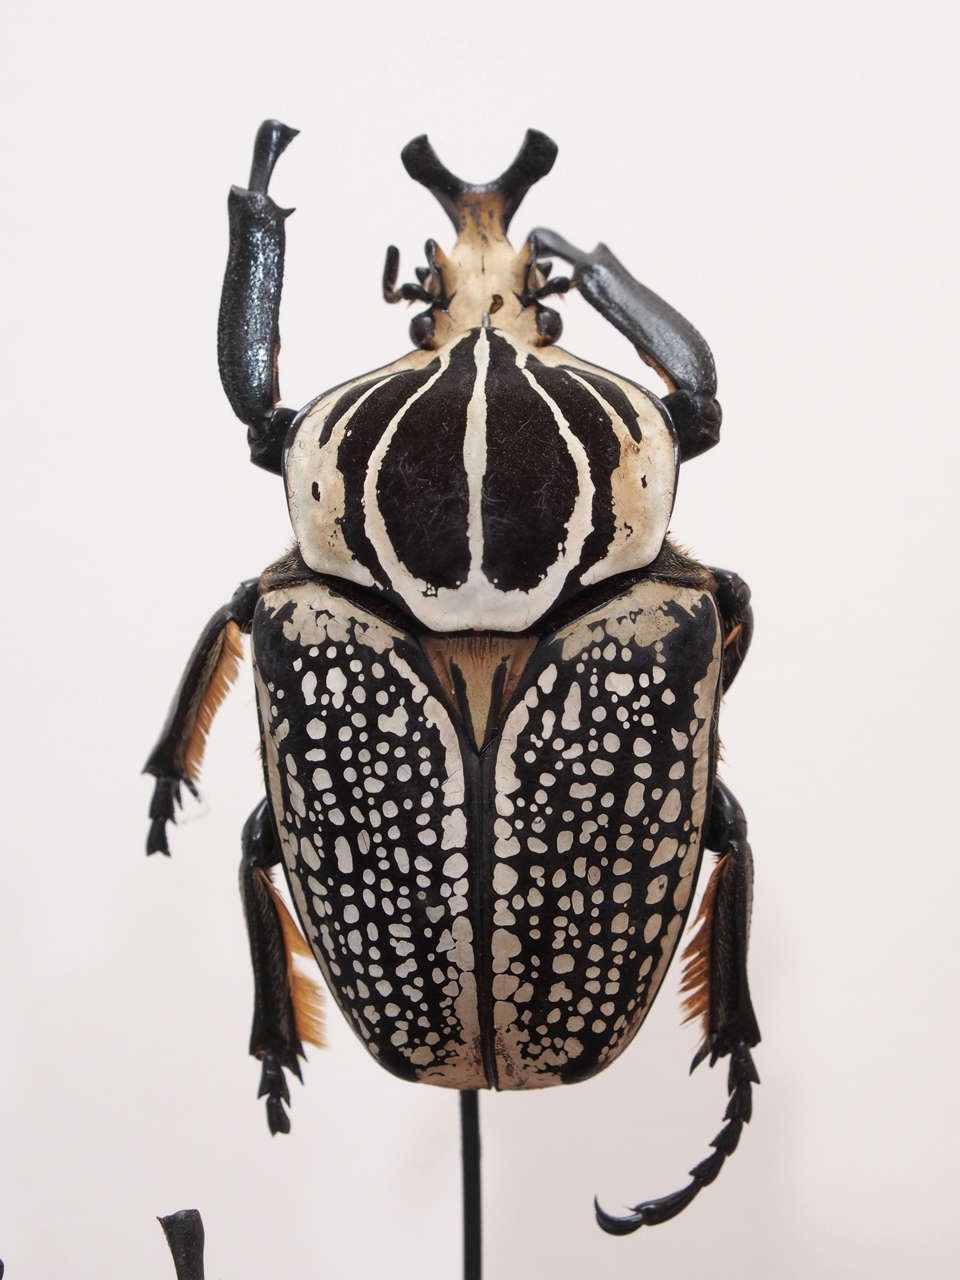 Unknown Specimen Beetles Under Glass Dome